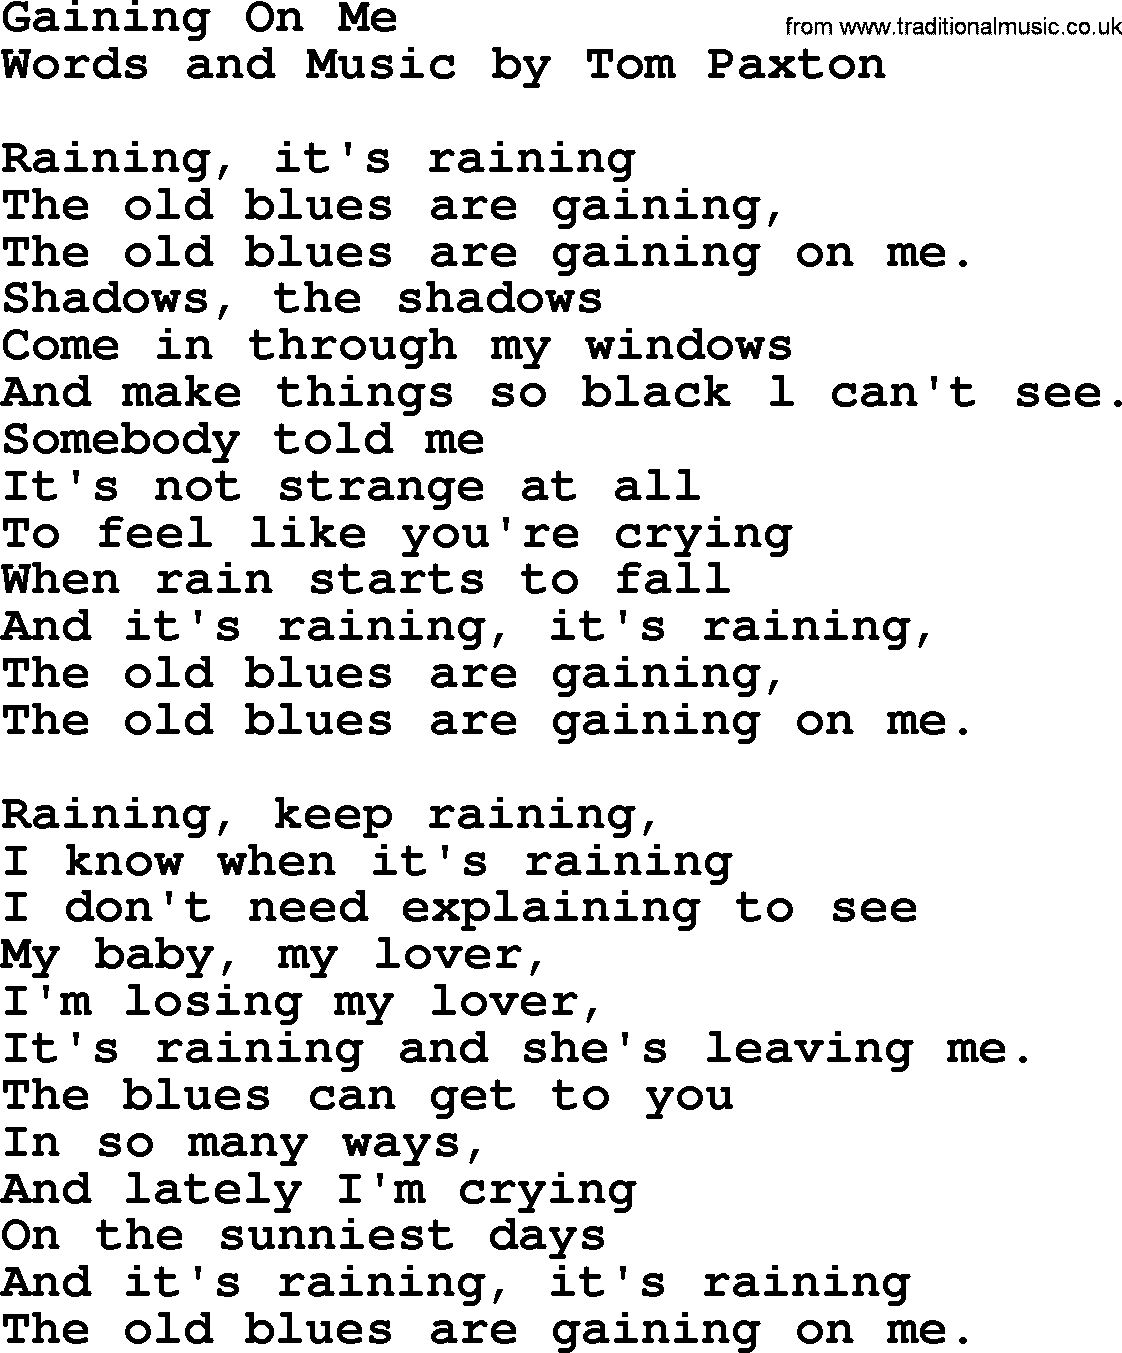 Tom Paxton song: Gaining On Me, lyrics